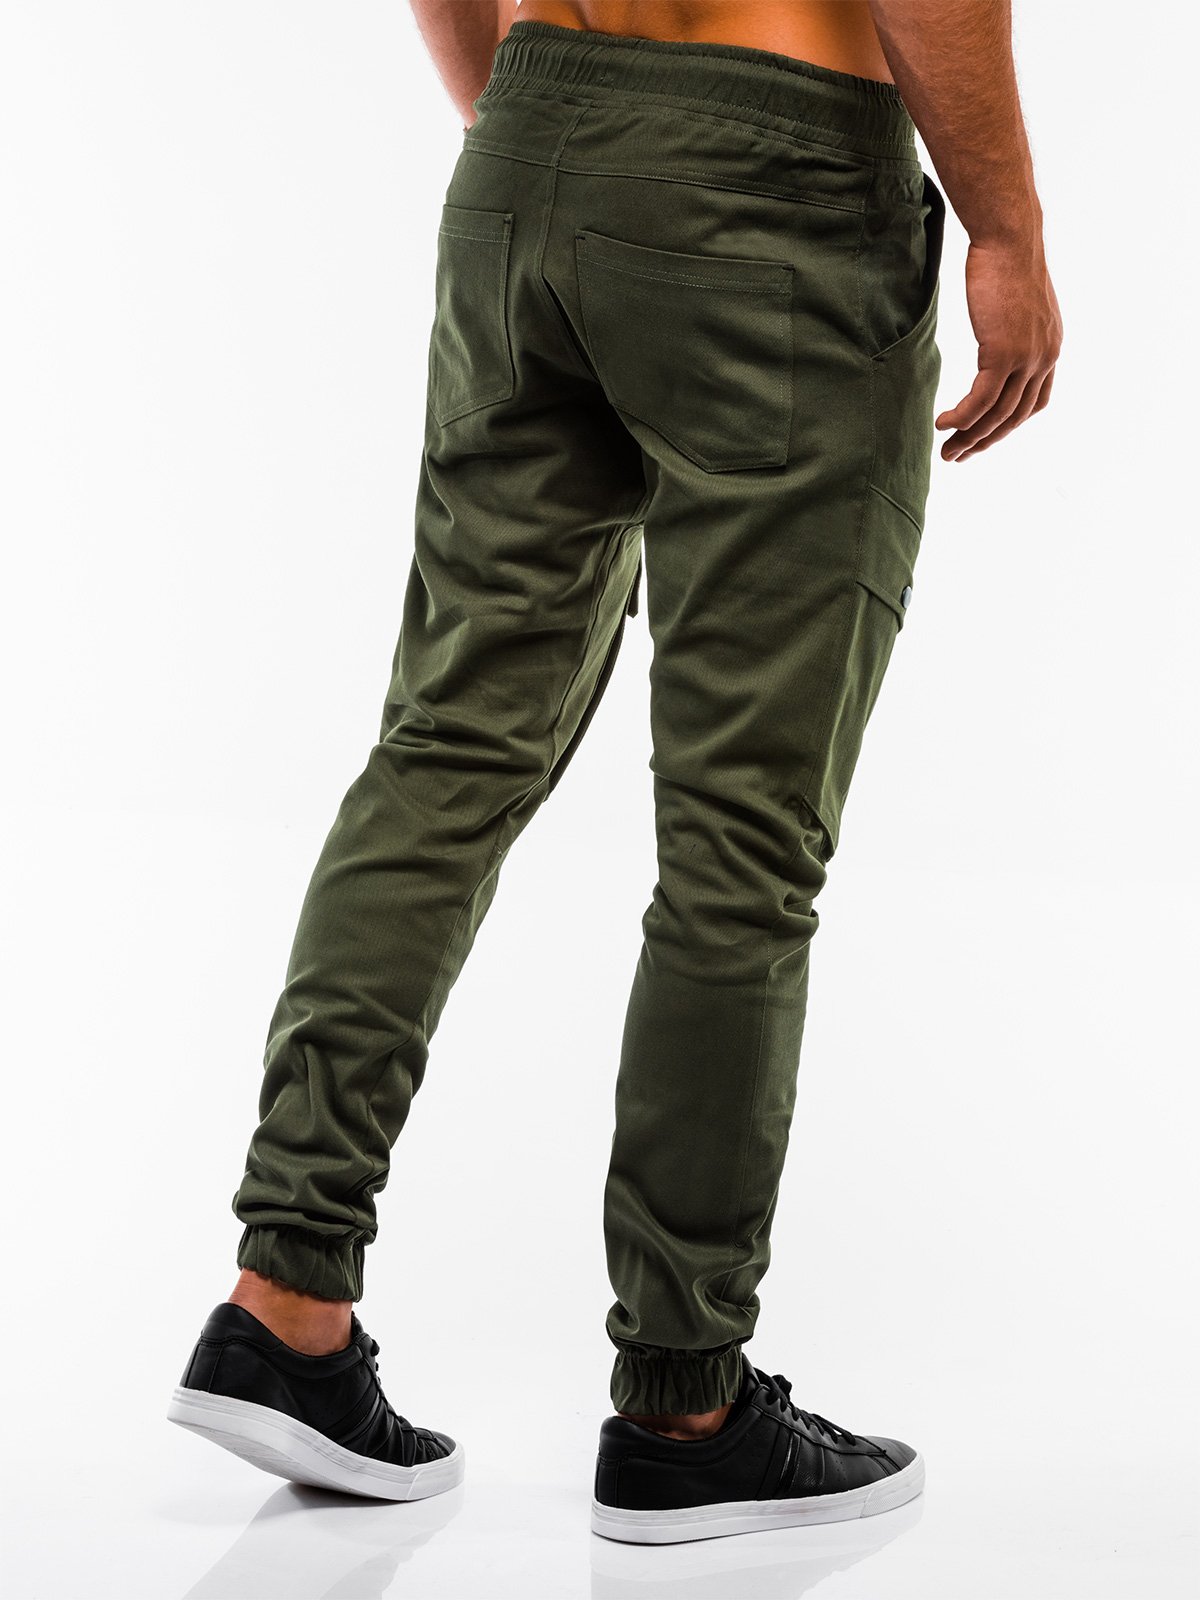 Men's pants joggers P707 - khaki | MODONE wholesale - Clothing For Men